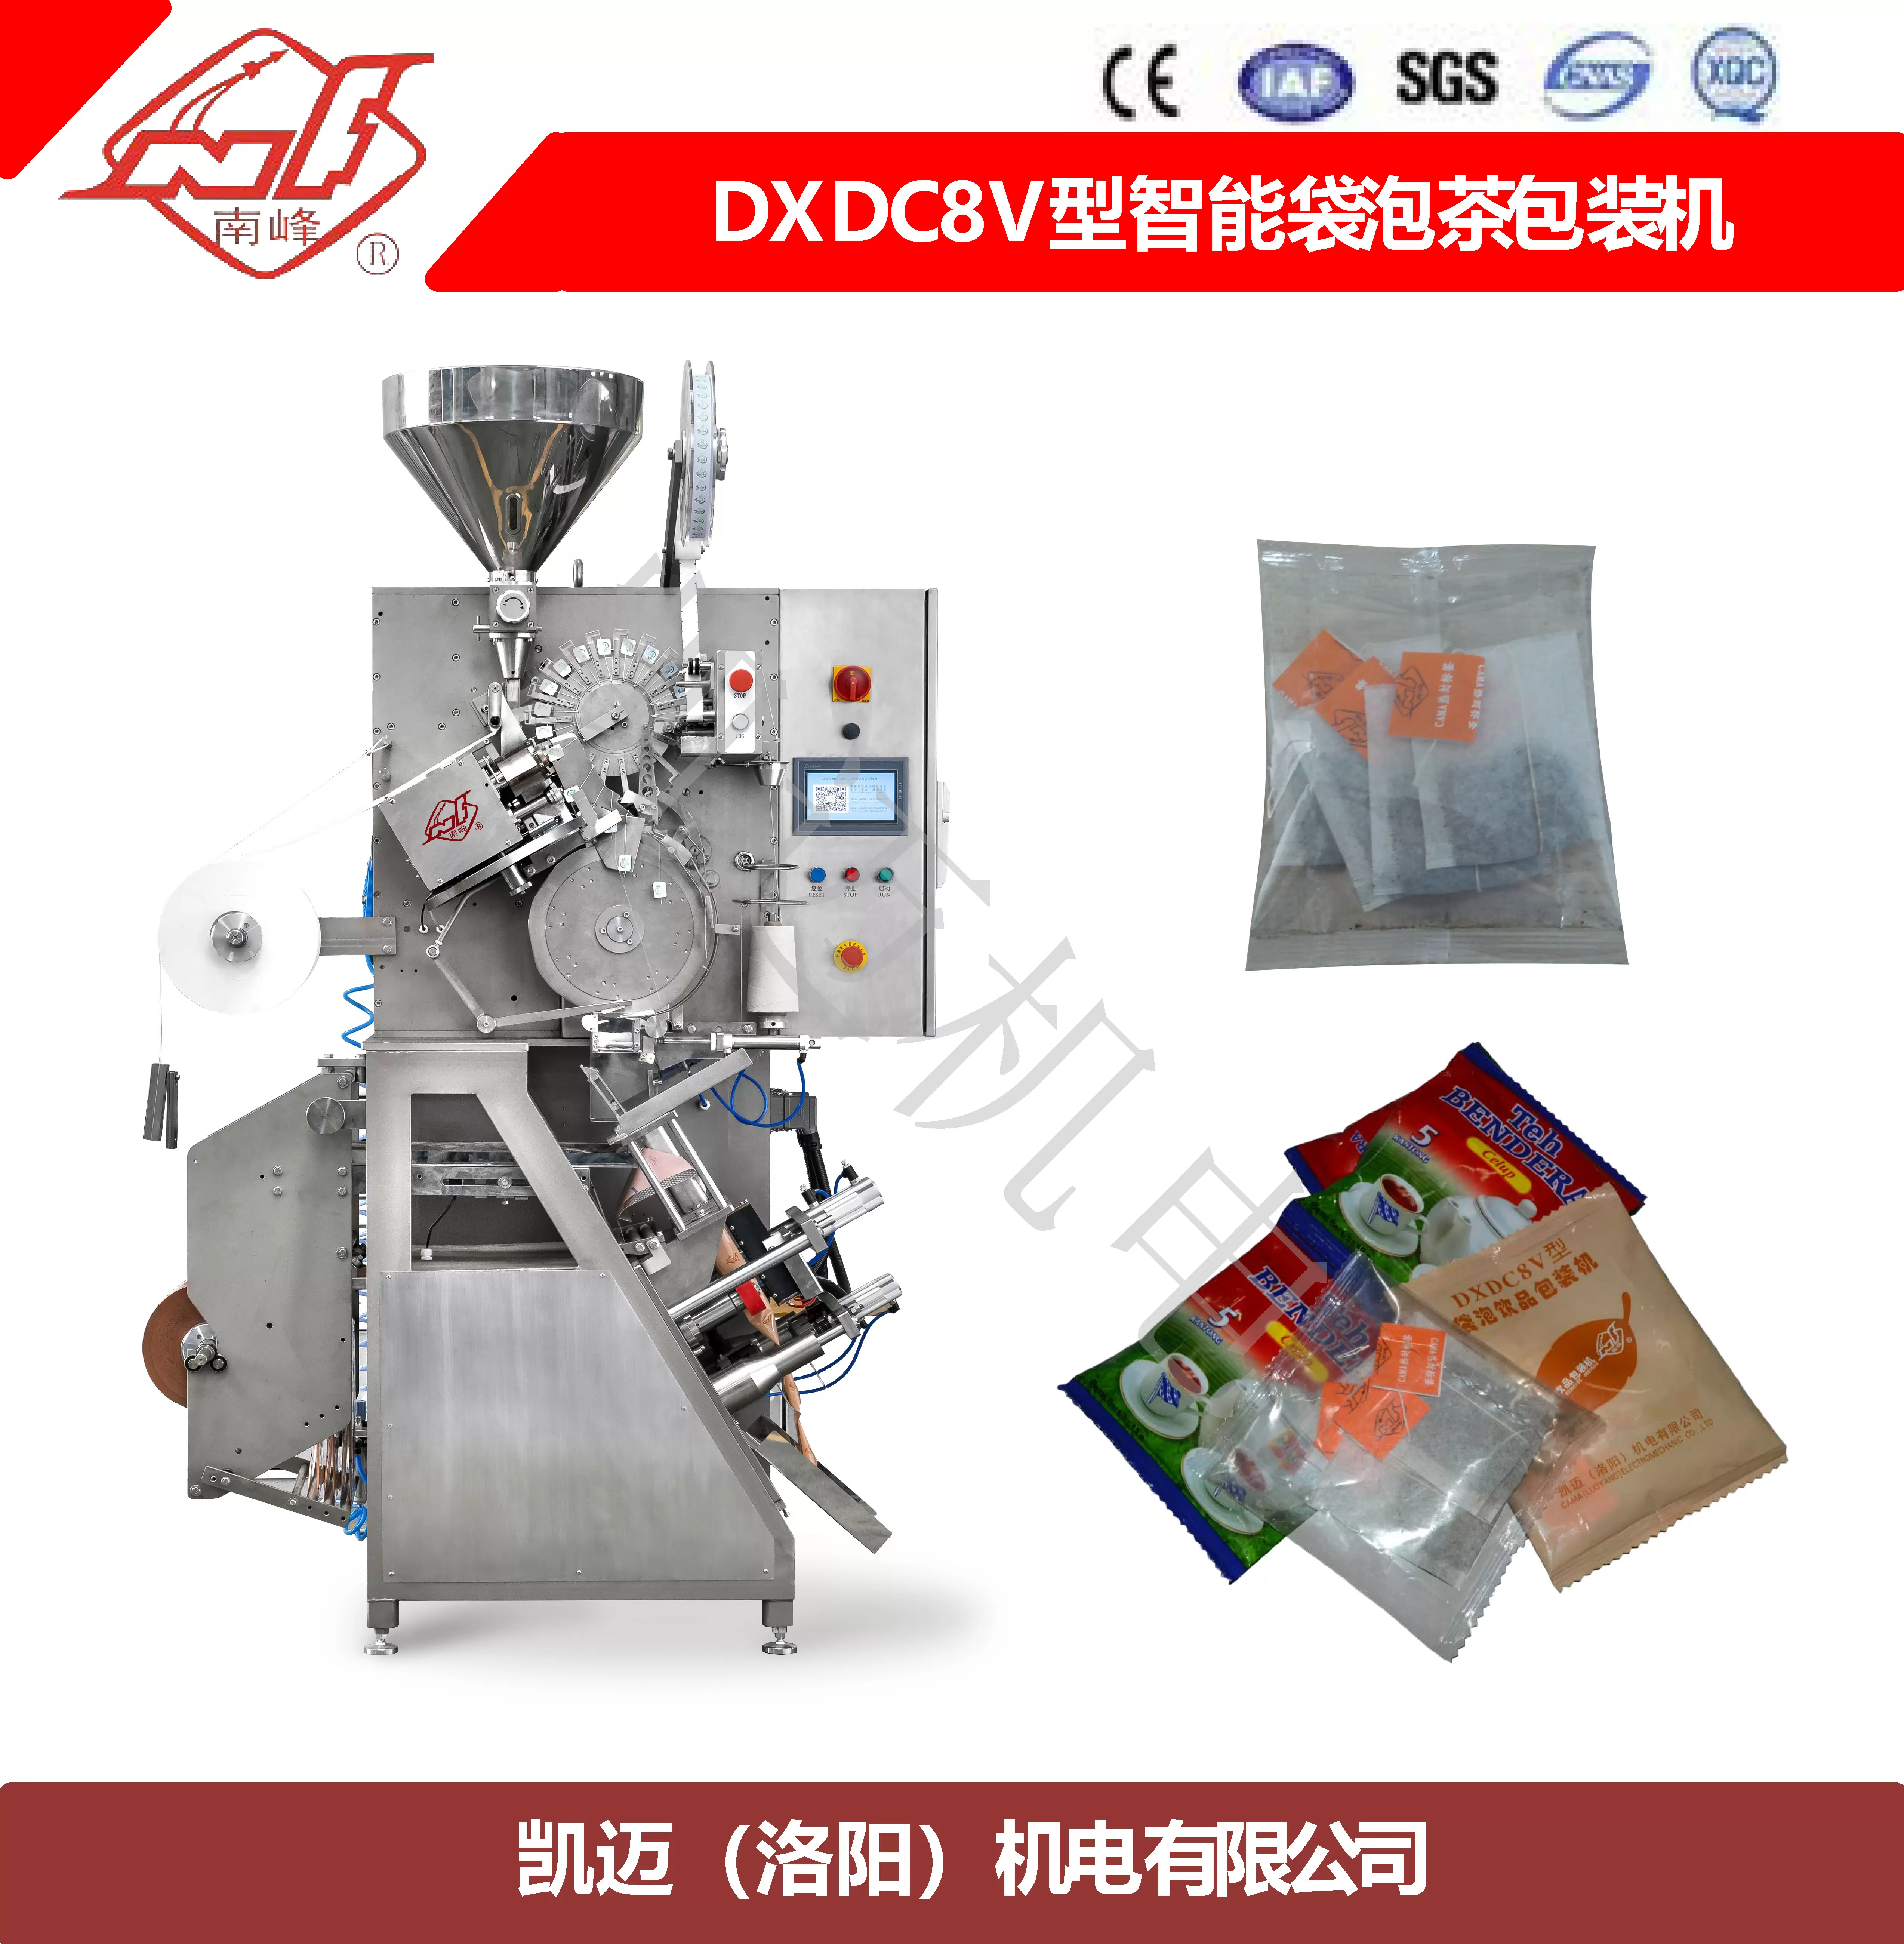 DXDC8V型袋泡茶包装机